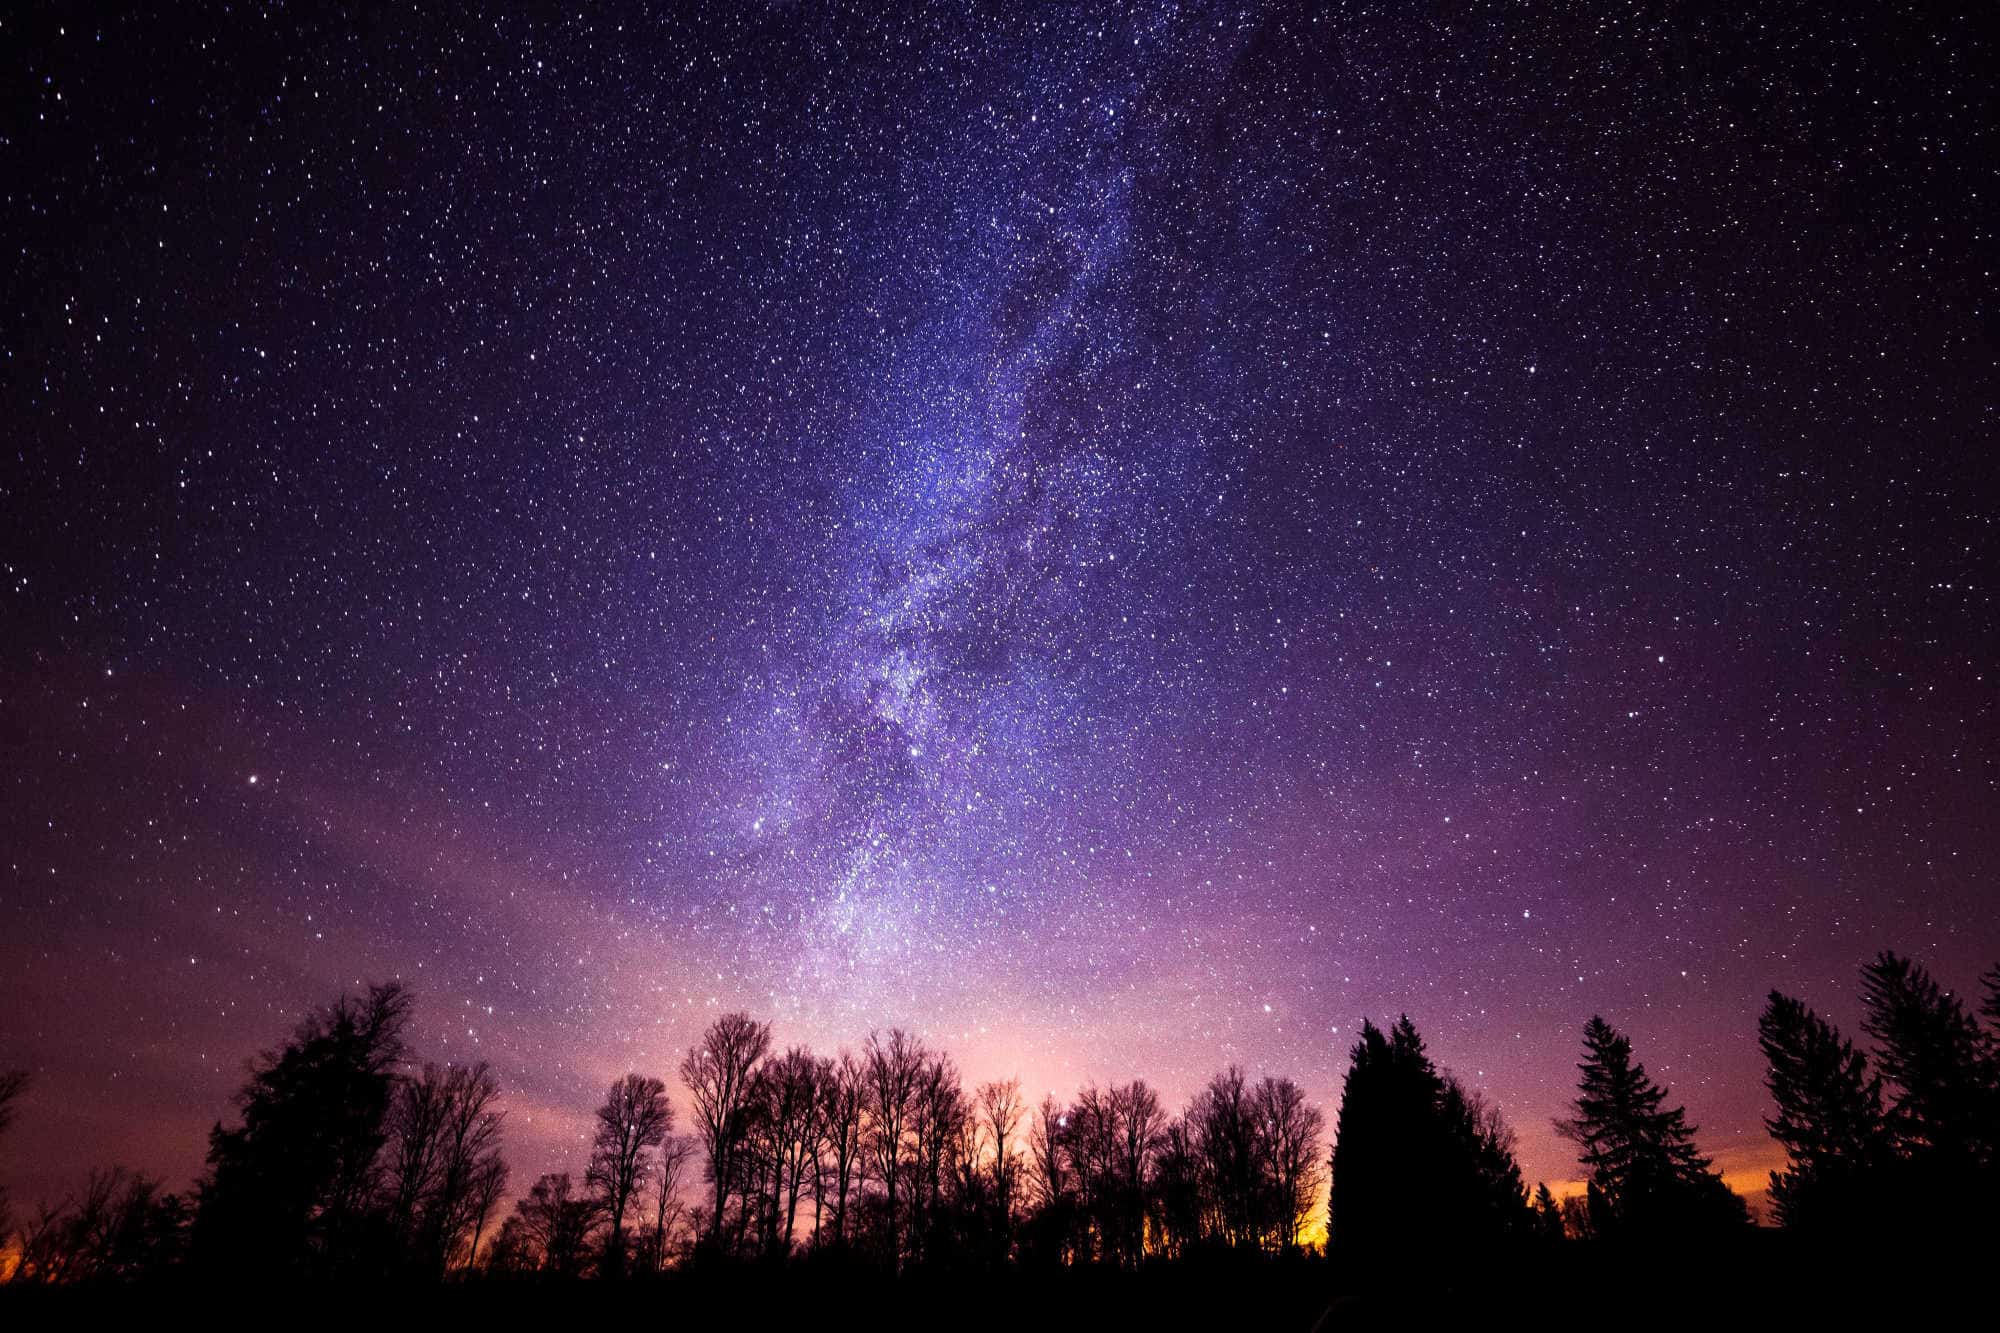 Star photo of Milky Way galaxy above trees at night